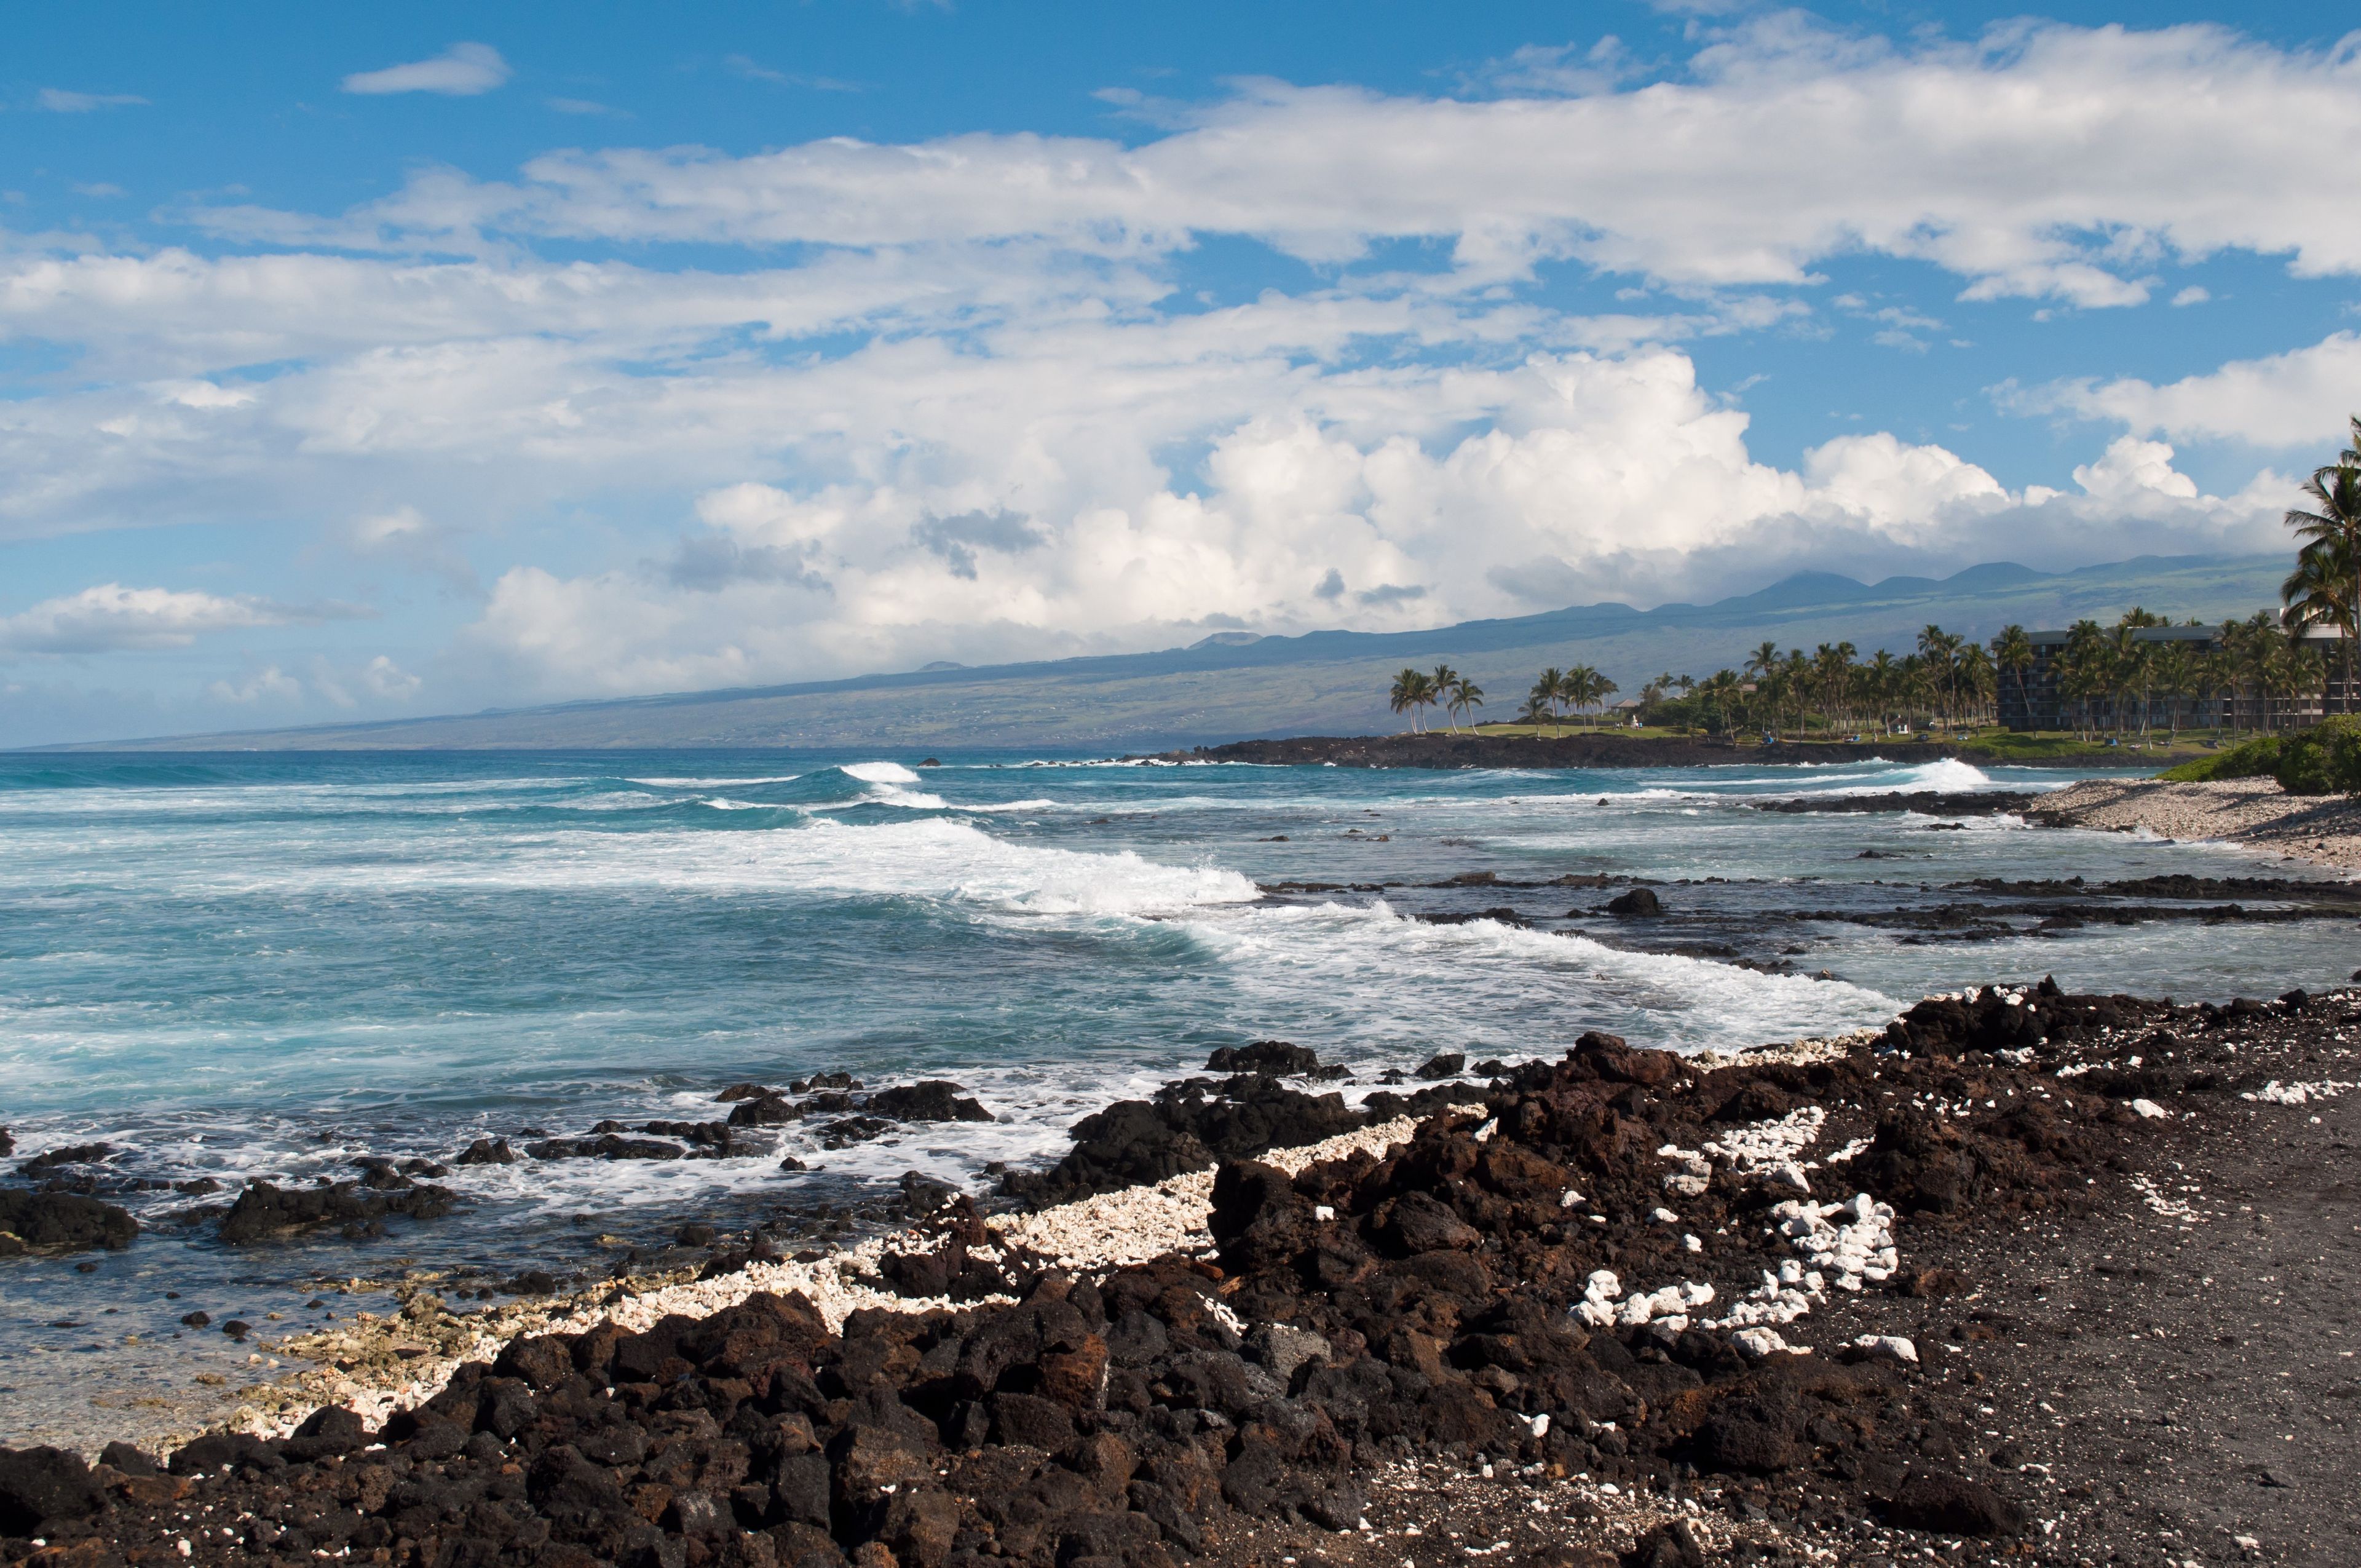 A rocky coastline in Hawaii.